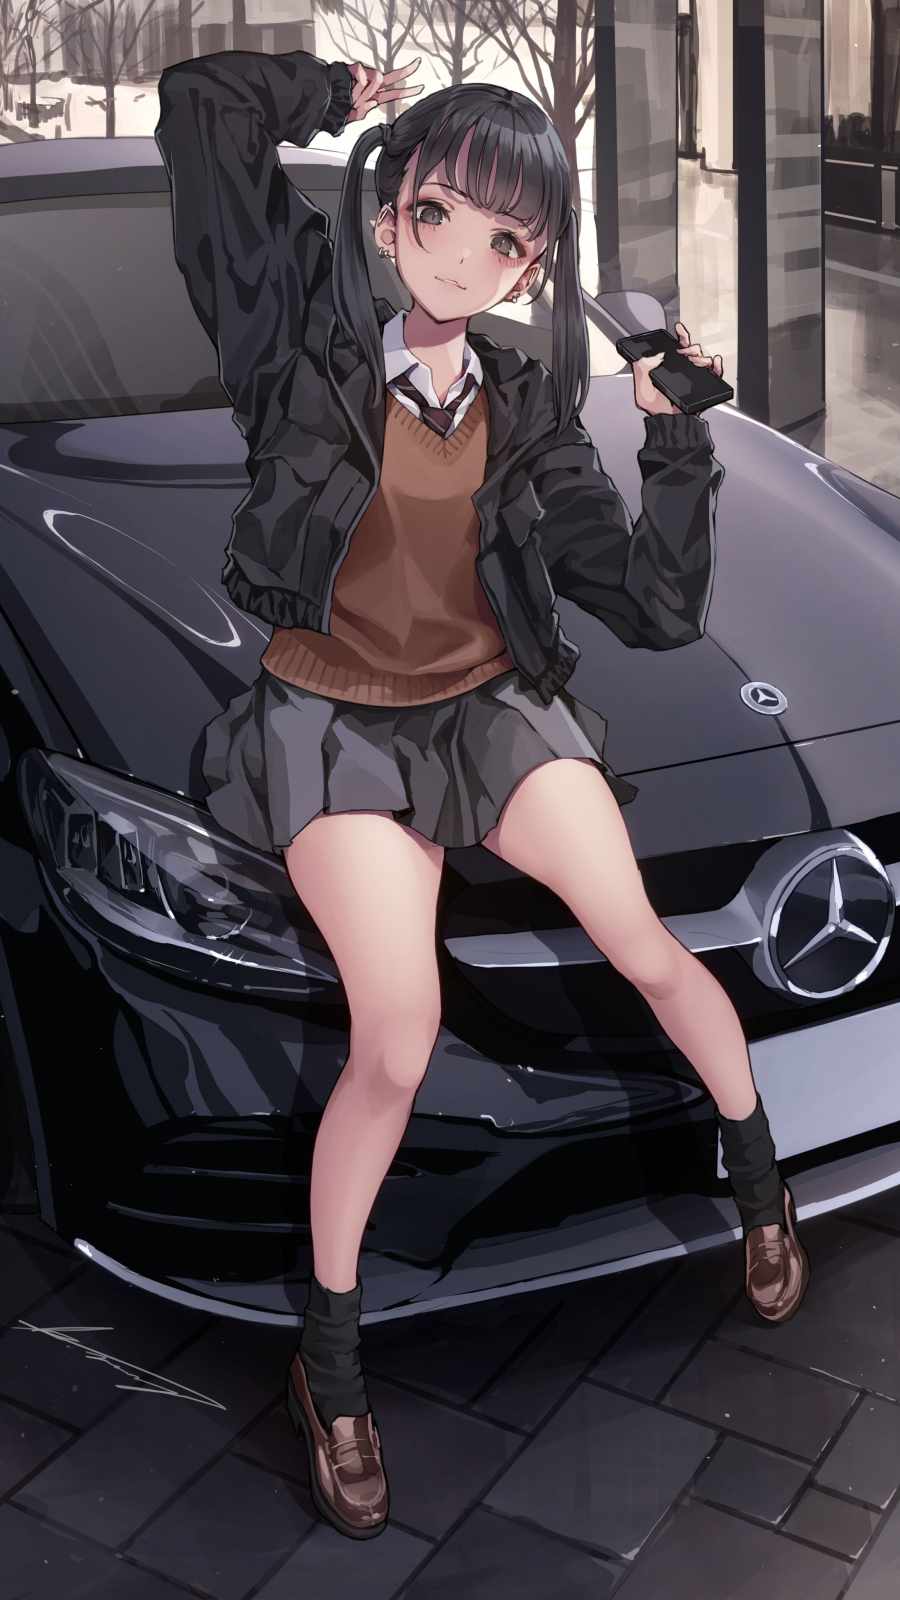 Anime Girl Car Pose iPhone Wallpaper